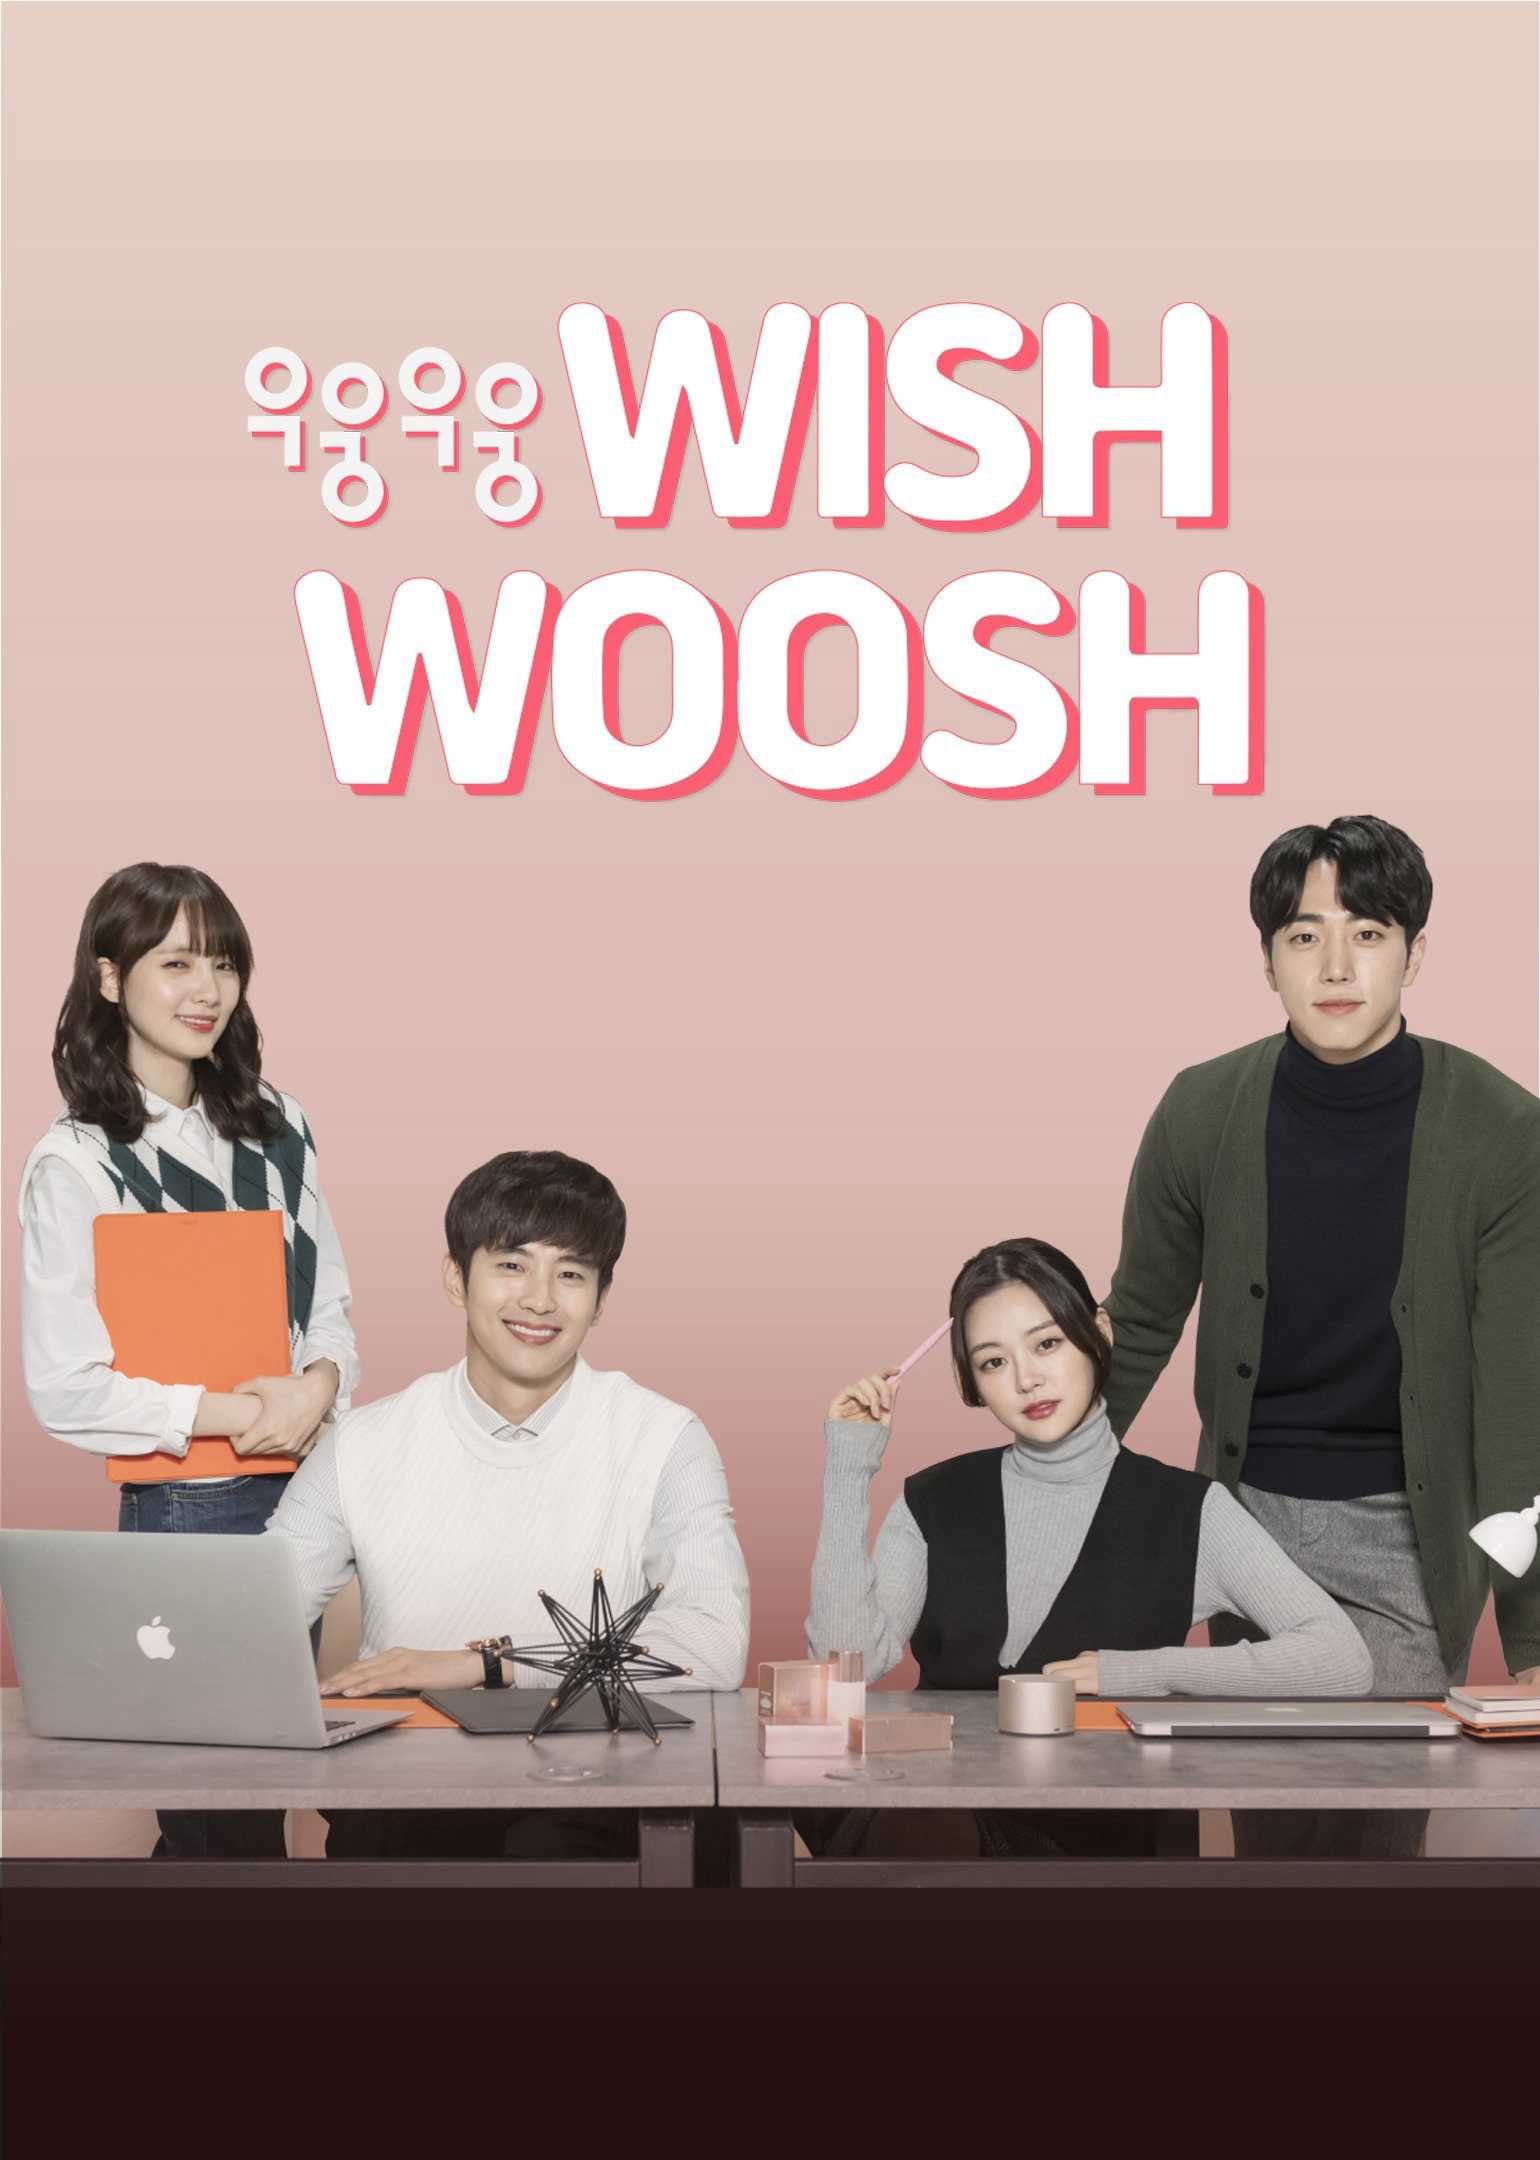 Mật Mã Tình Yêu 1 - Wish Woosh Season 1